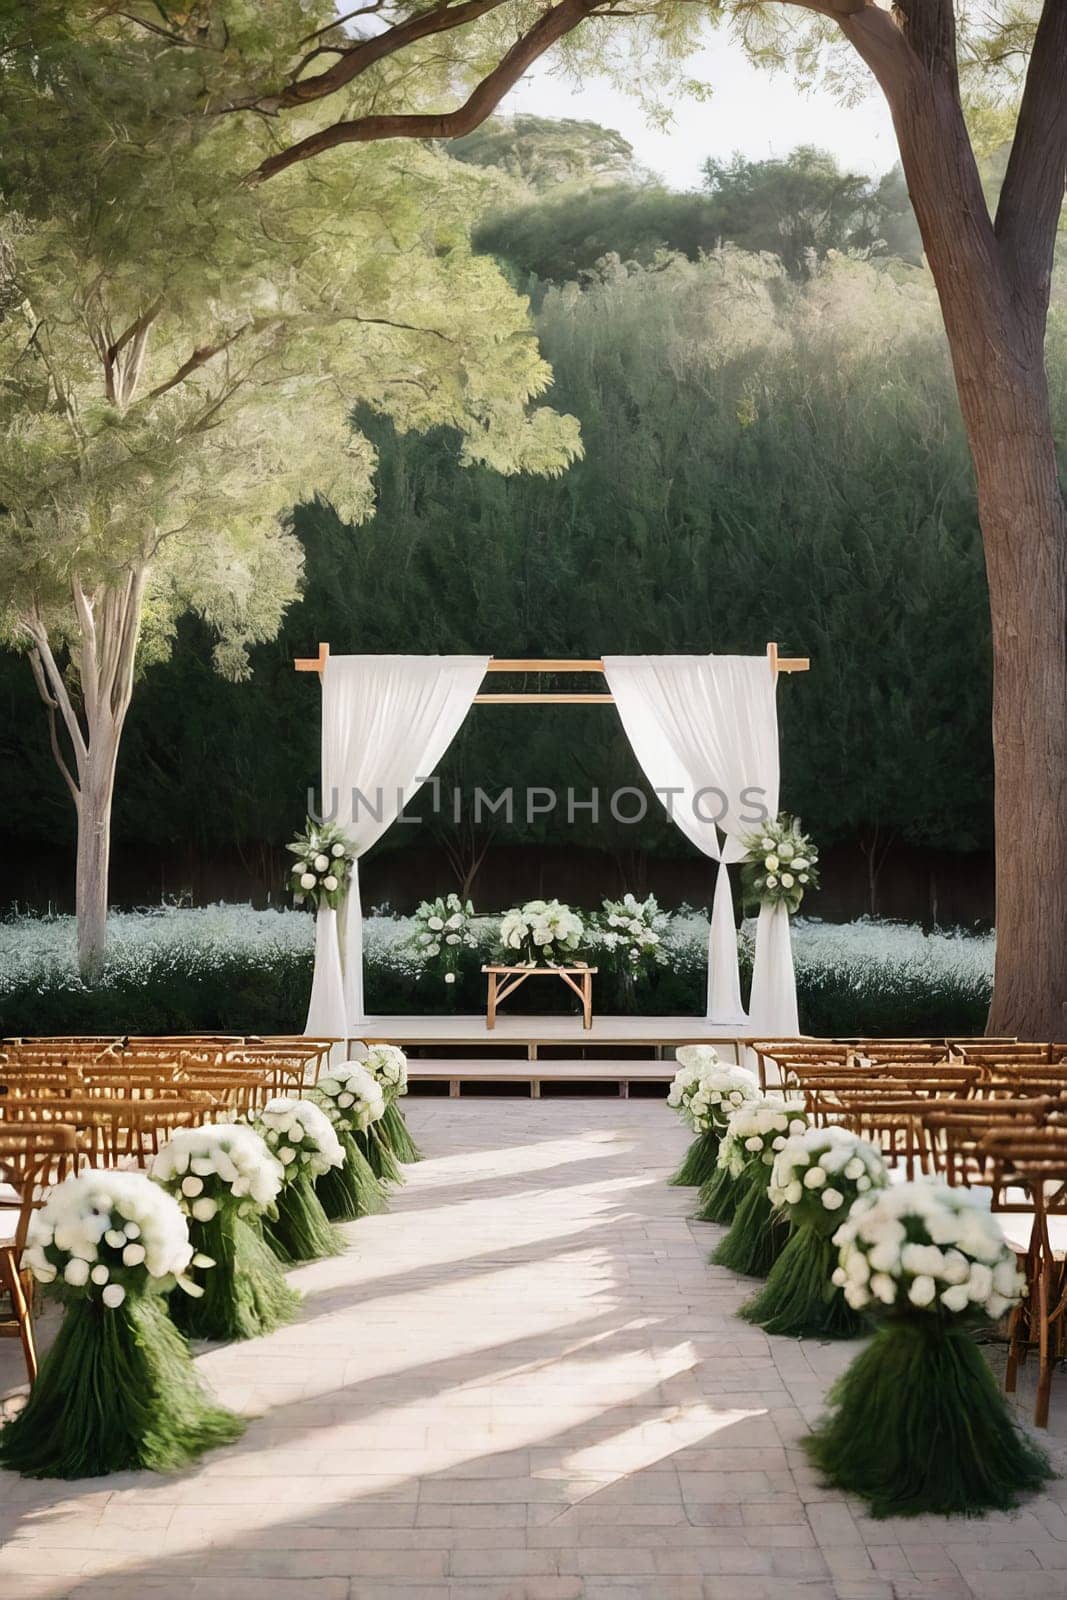 Romance and Simplicity: Wedding Celebration in an Elegant Backyard.